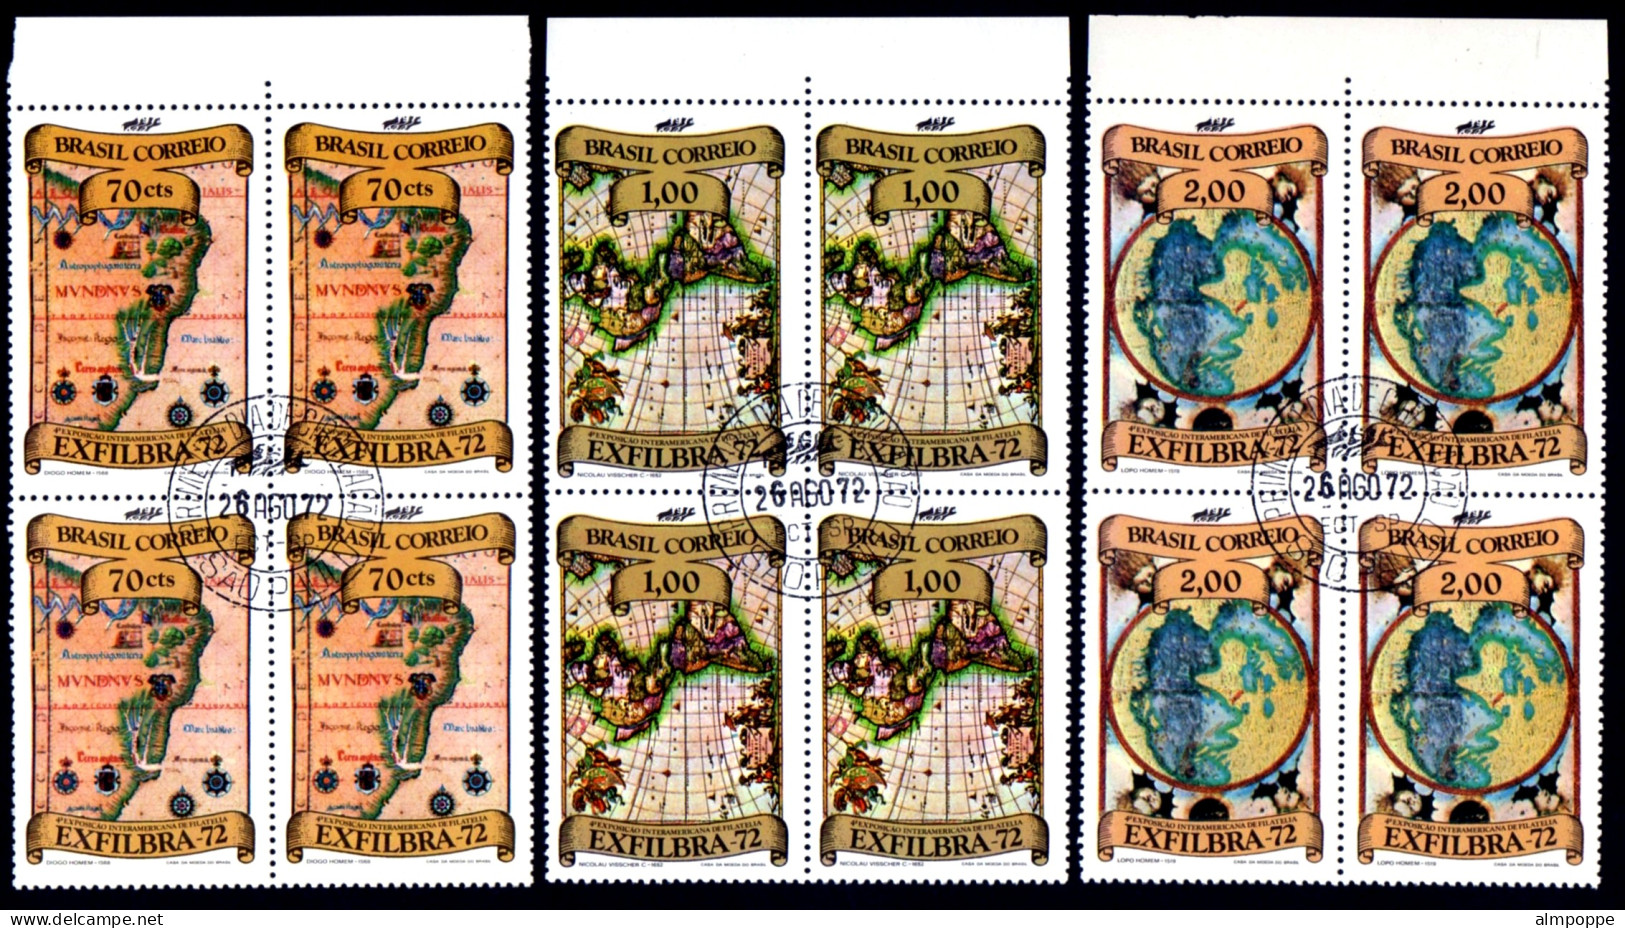 Ref. BR-1239-41-QC BRAZIL 1972 - EXFILBRA, EXHIBITION,,ANTIQUE MAPS,MI# 1333-35,CANCELED NH, PHILATELY 12V Sc# 1239-1241 - Used Stamps